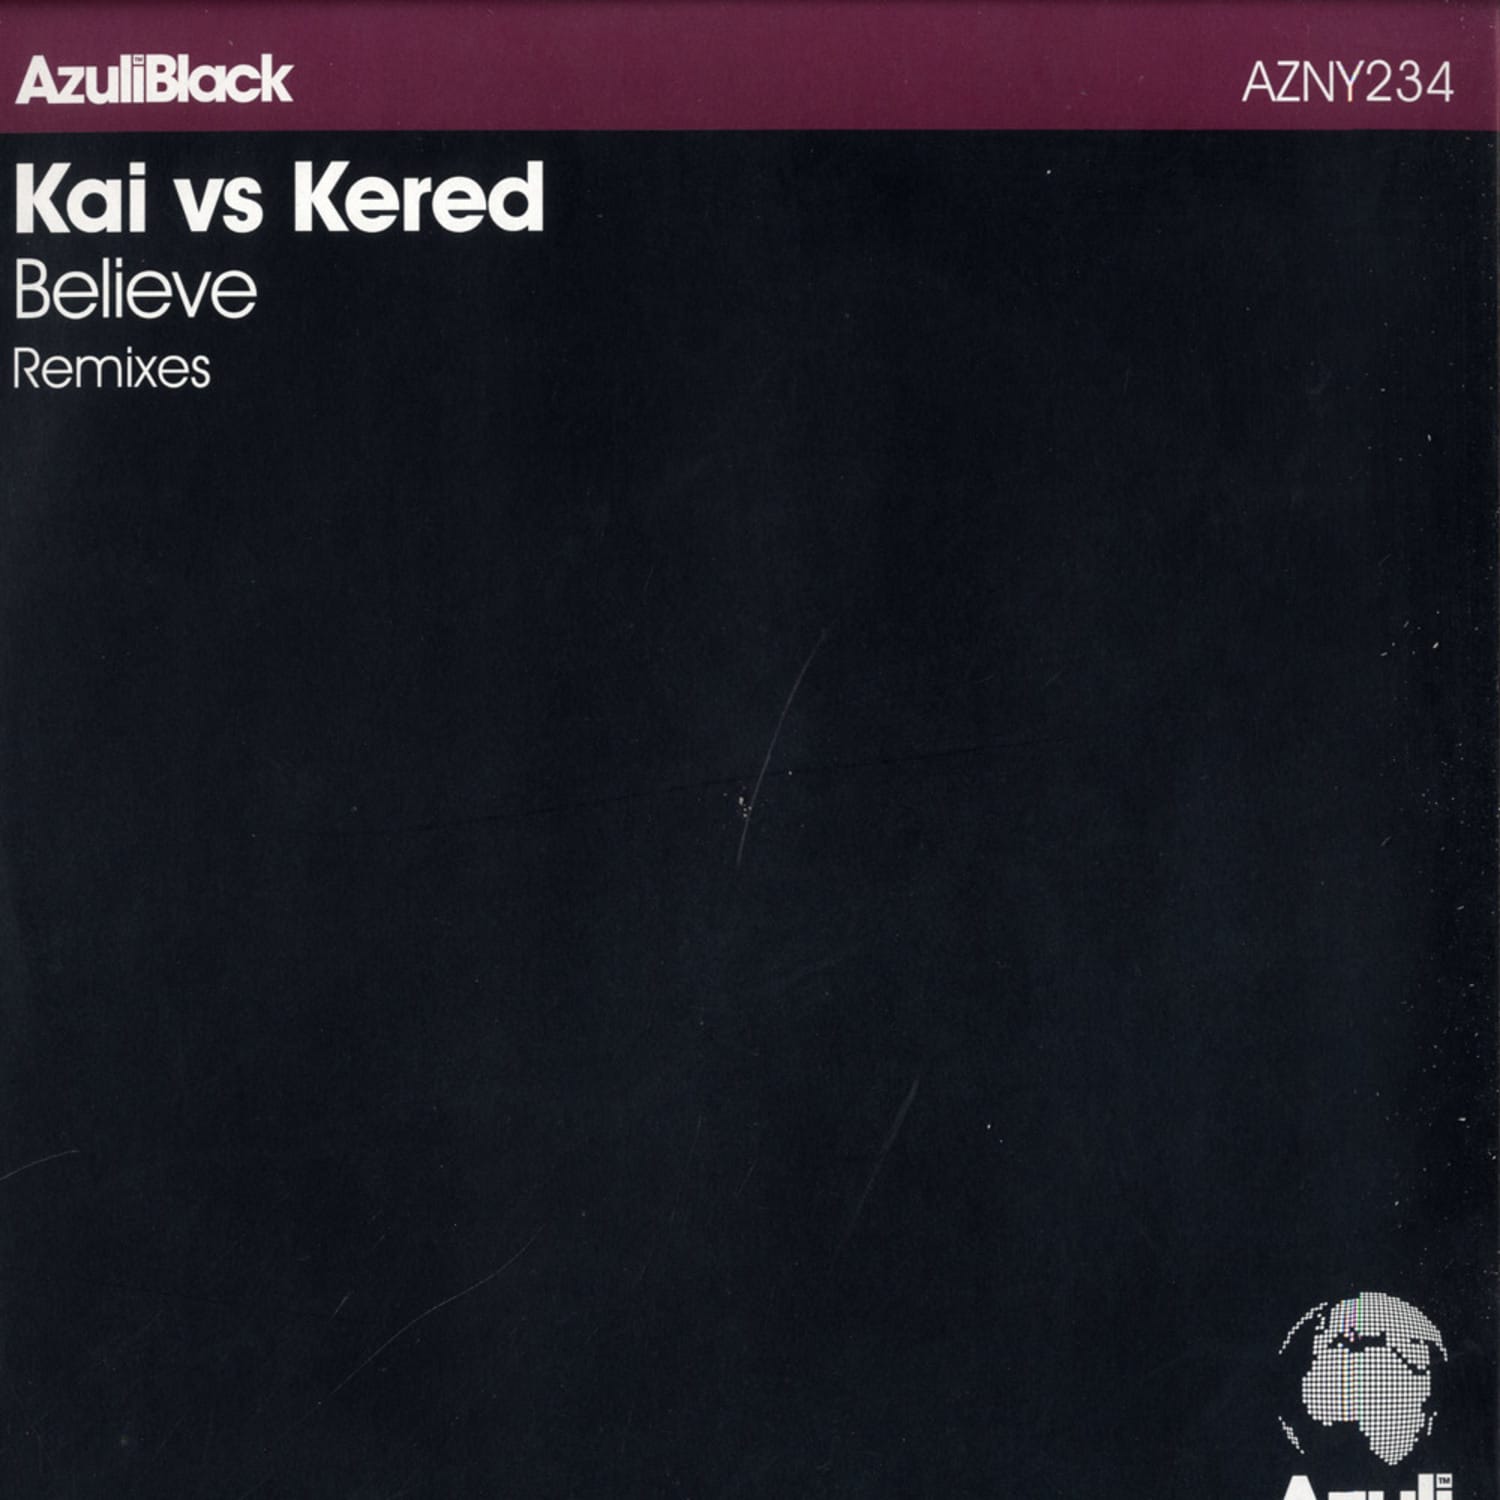 Kai vs Kered - BELIEVE REMIX